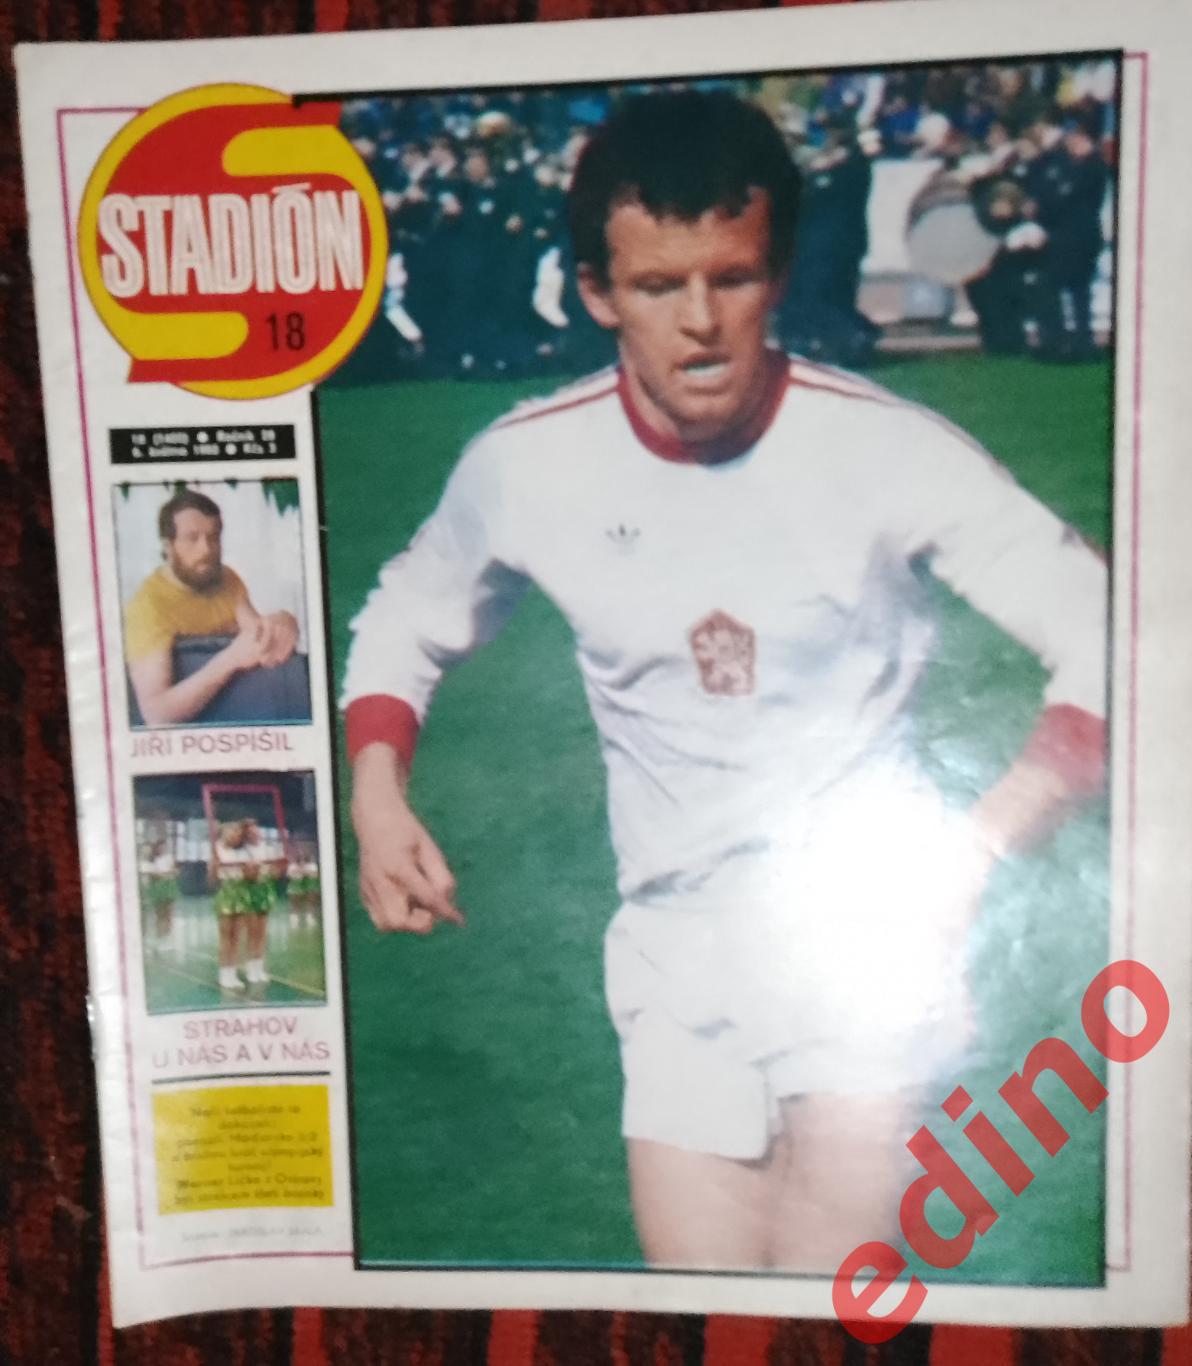 журнал Стадион(stadion) 1980 год Бельгия участник Евро 80 1